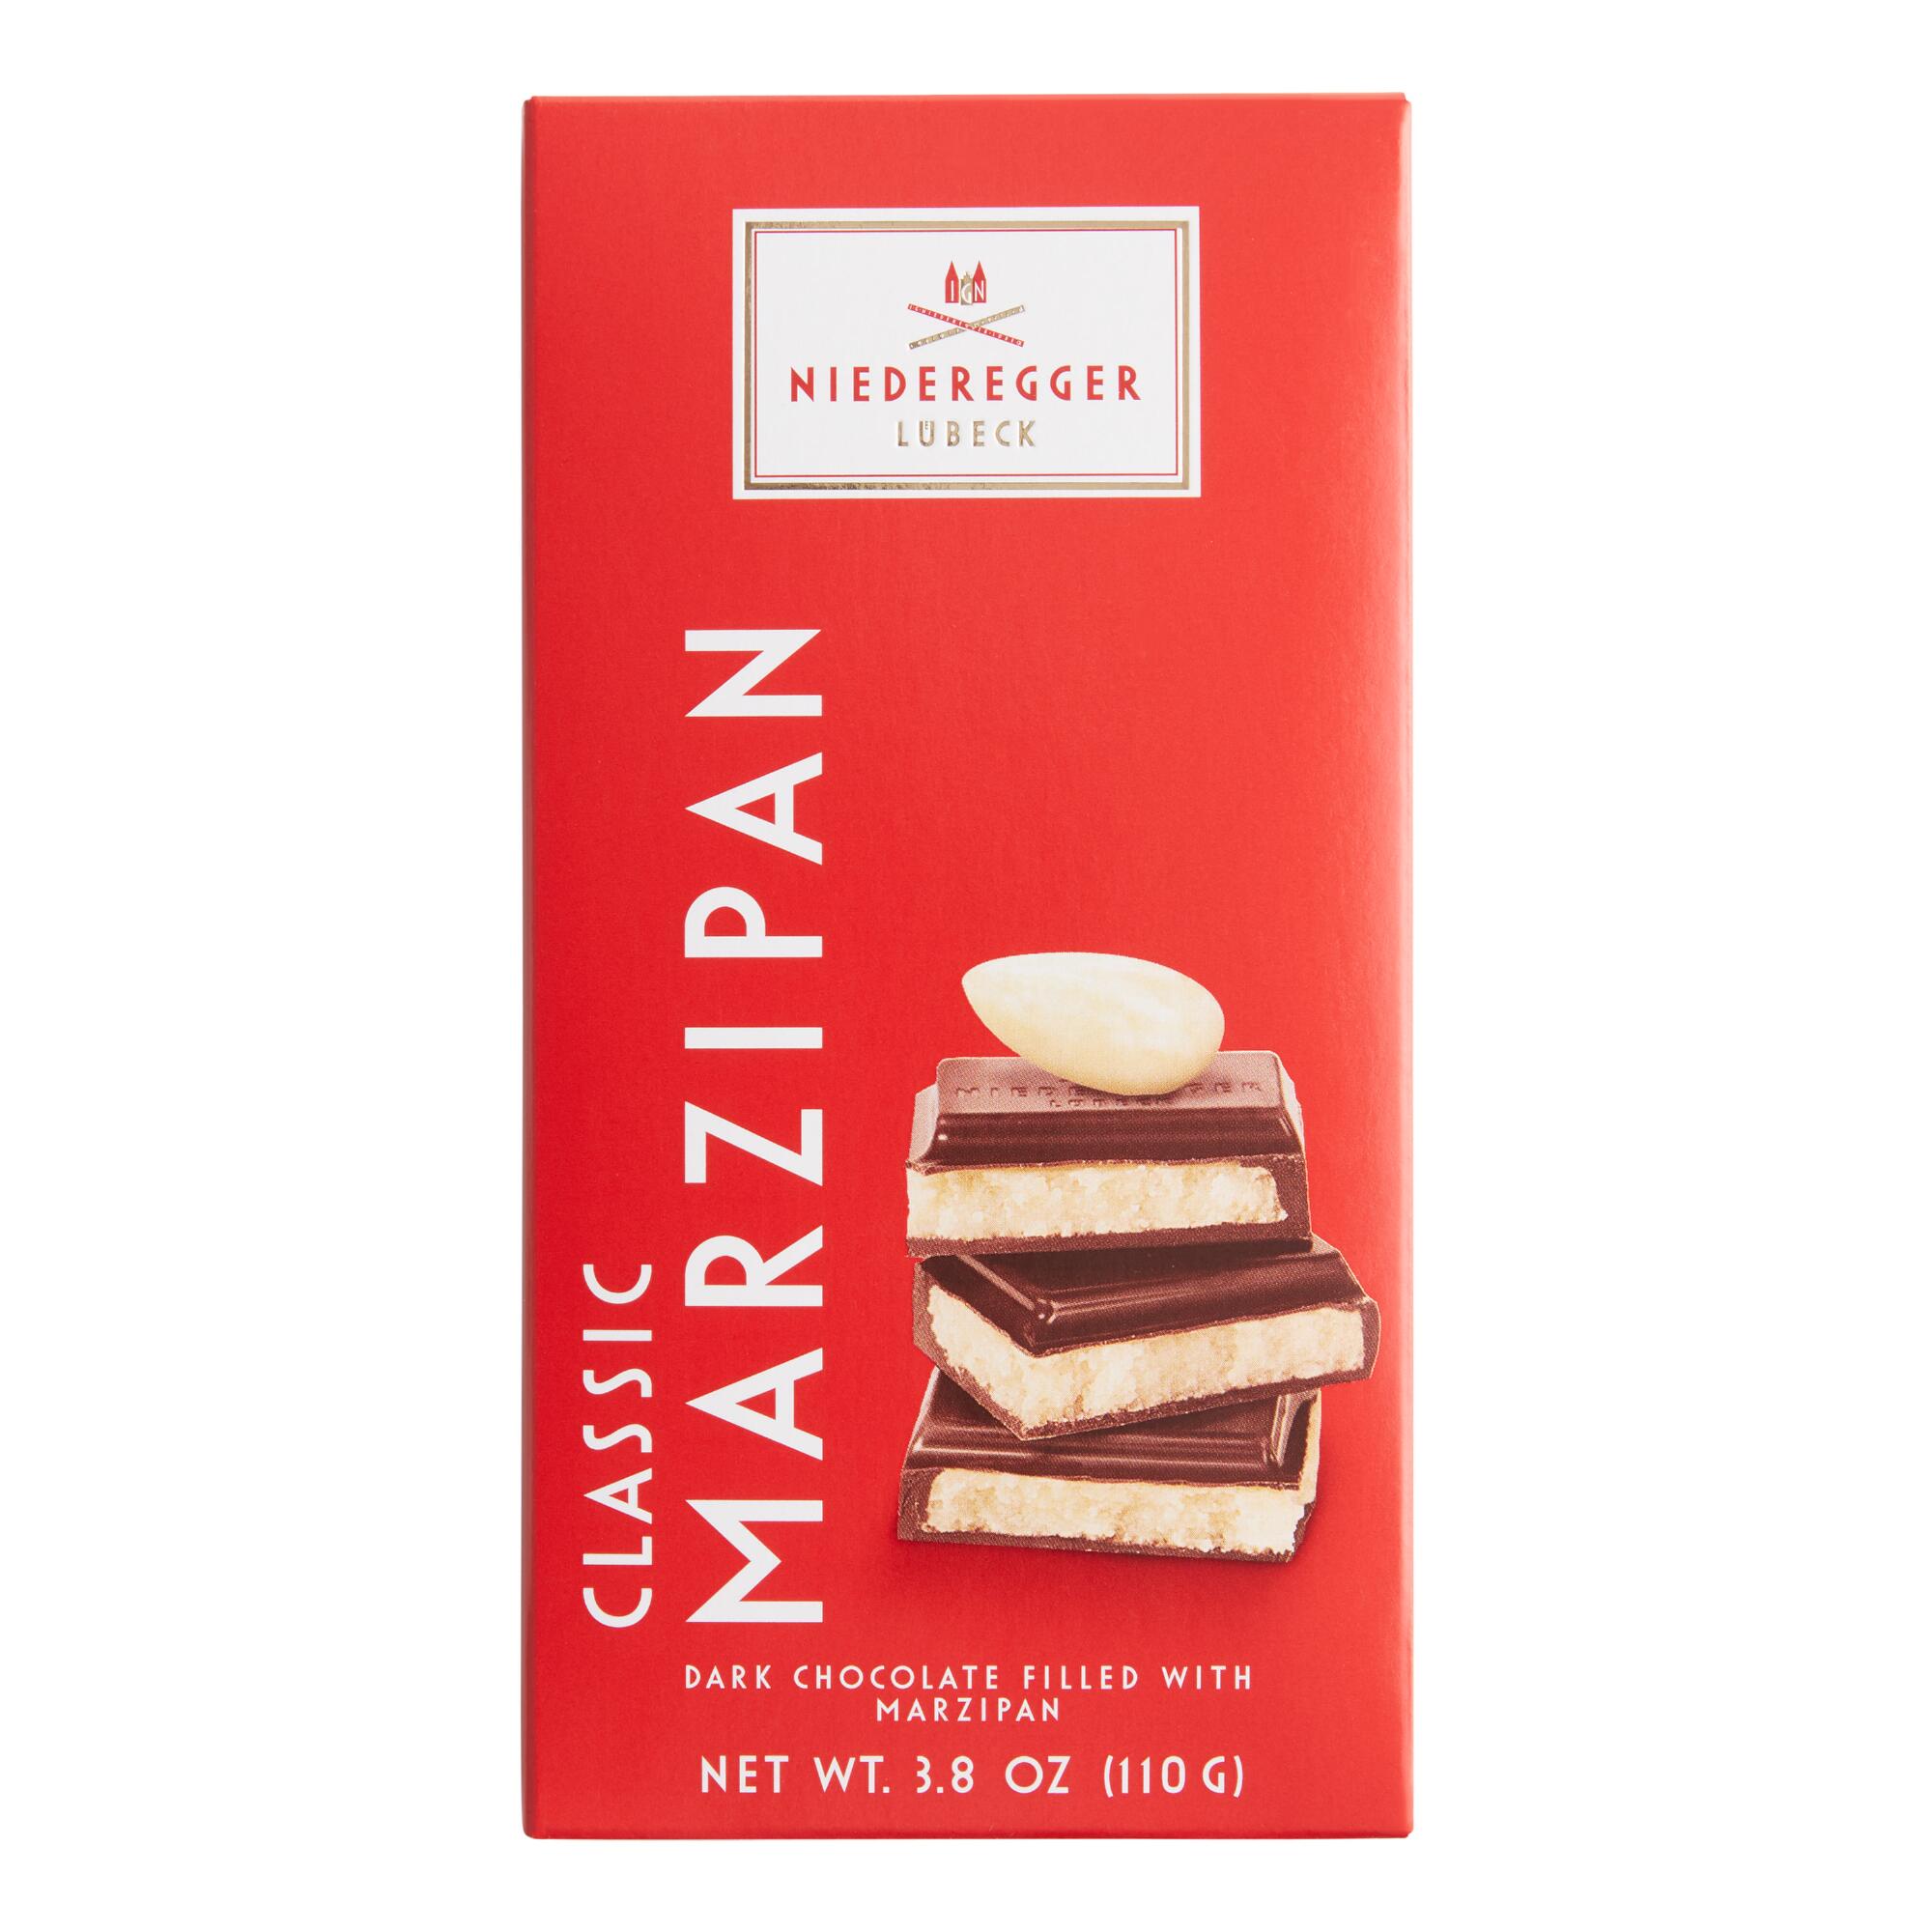 Niederegger Classic Marzipan Dark Chocolate Bar Set of 2 by World Market